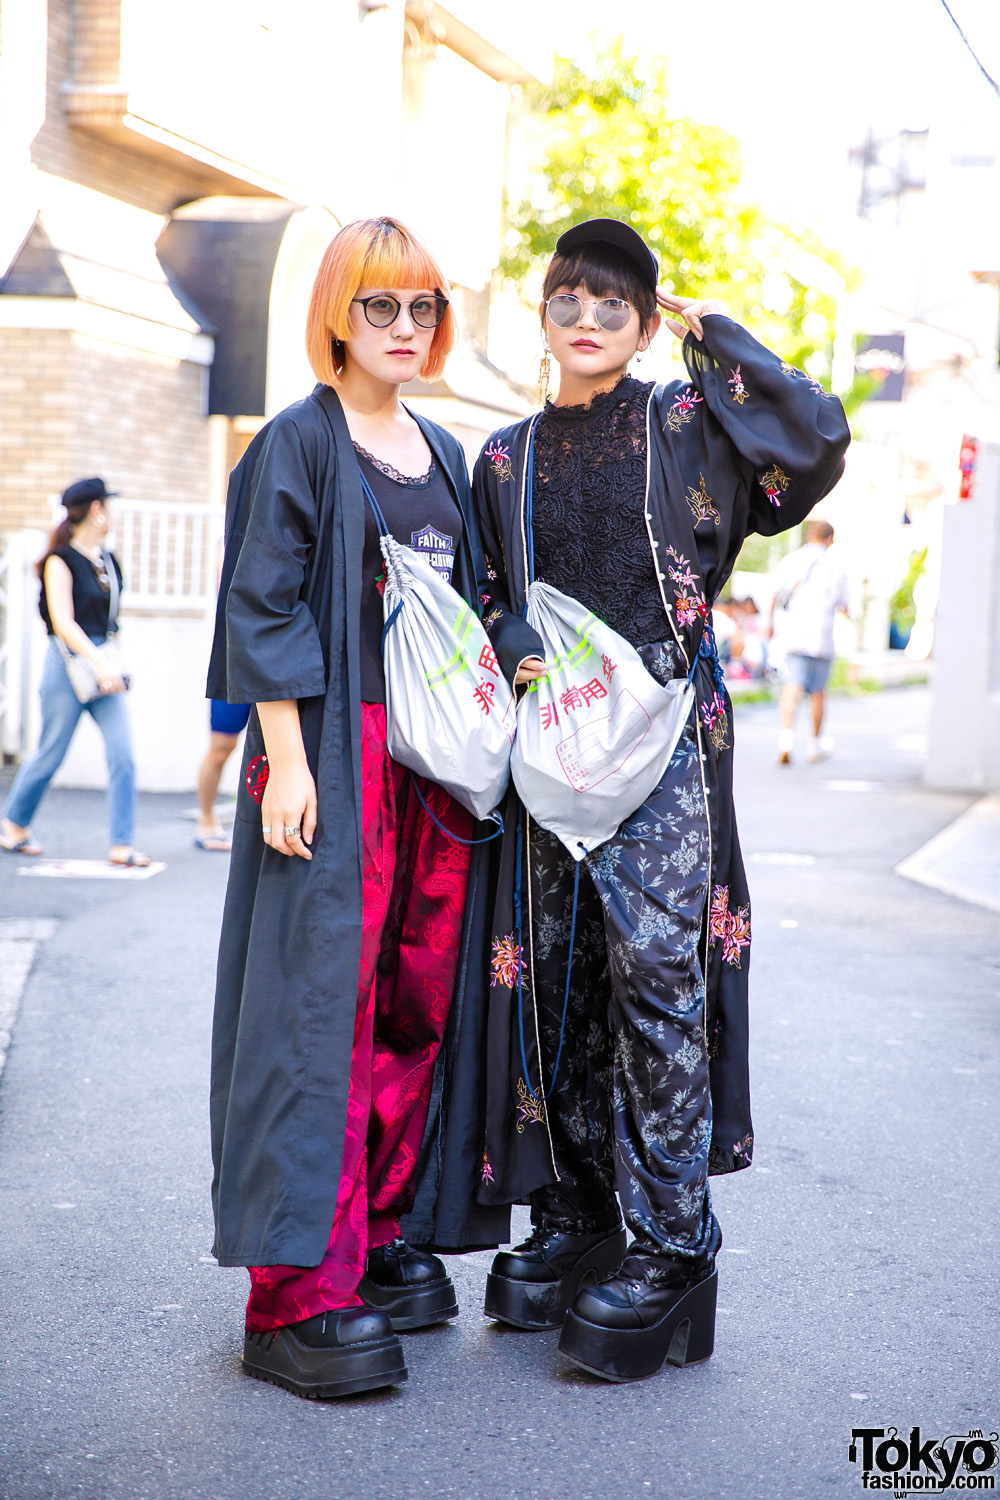 Harajuku Girls in Long Coats, Black Lace & Platforms w/ Faith Tokyo, Demonia, Vivienne Westwood & Never Mind the XU